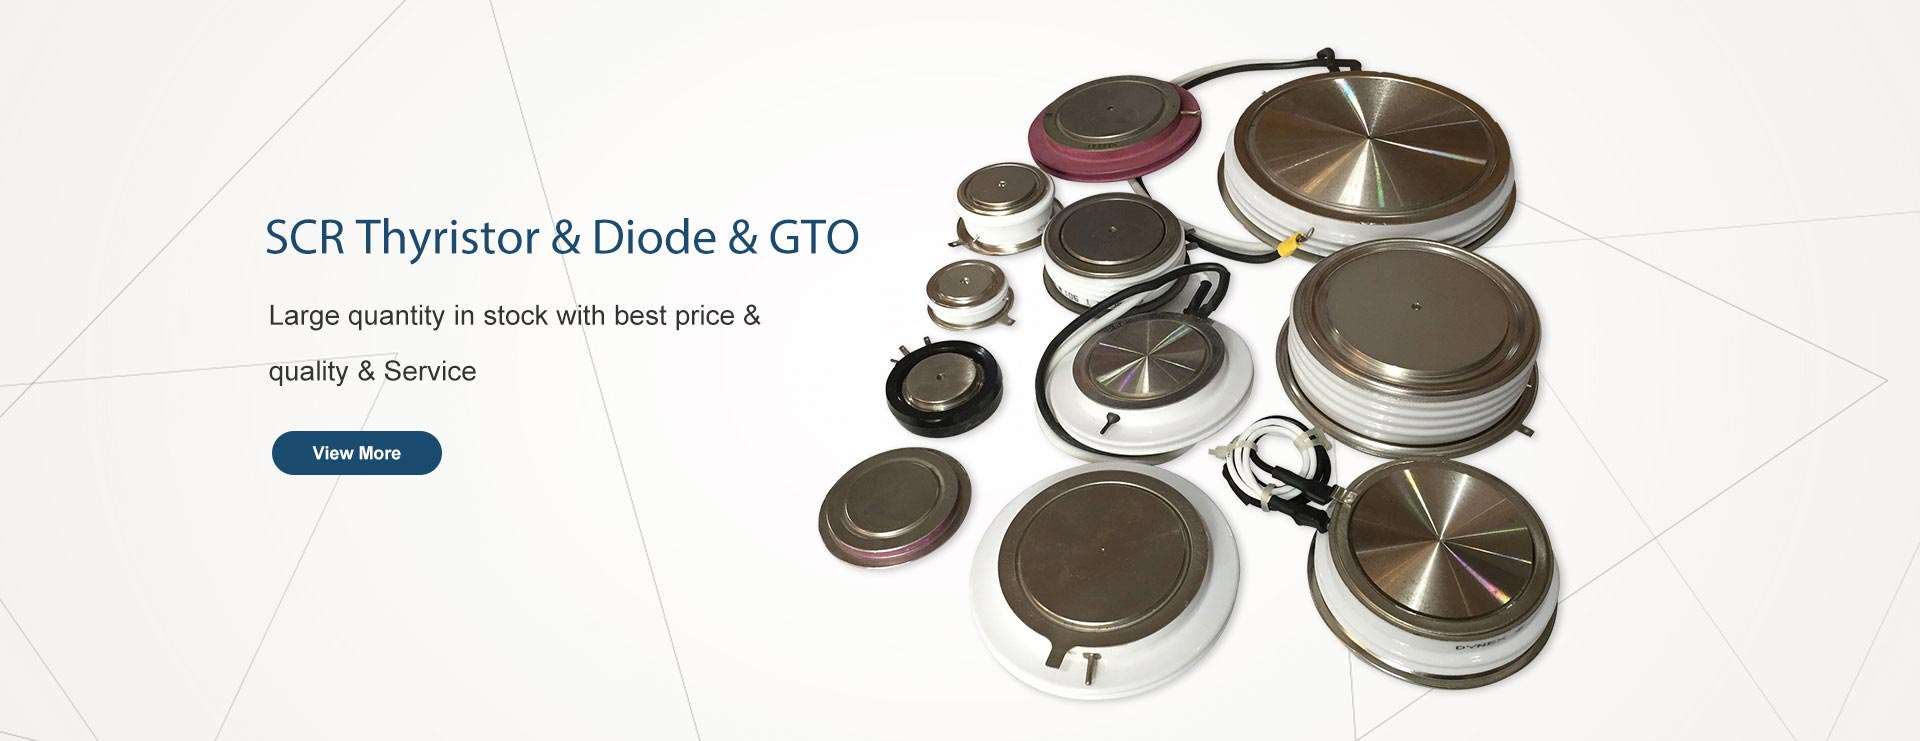 GTO & Thyristor & Diode Modules